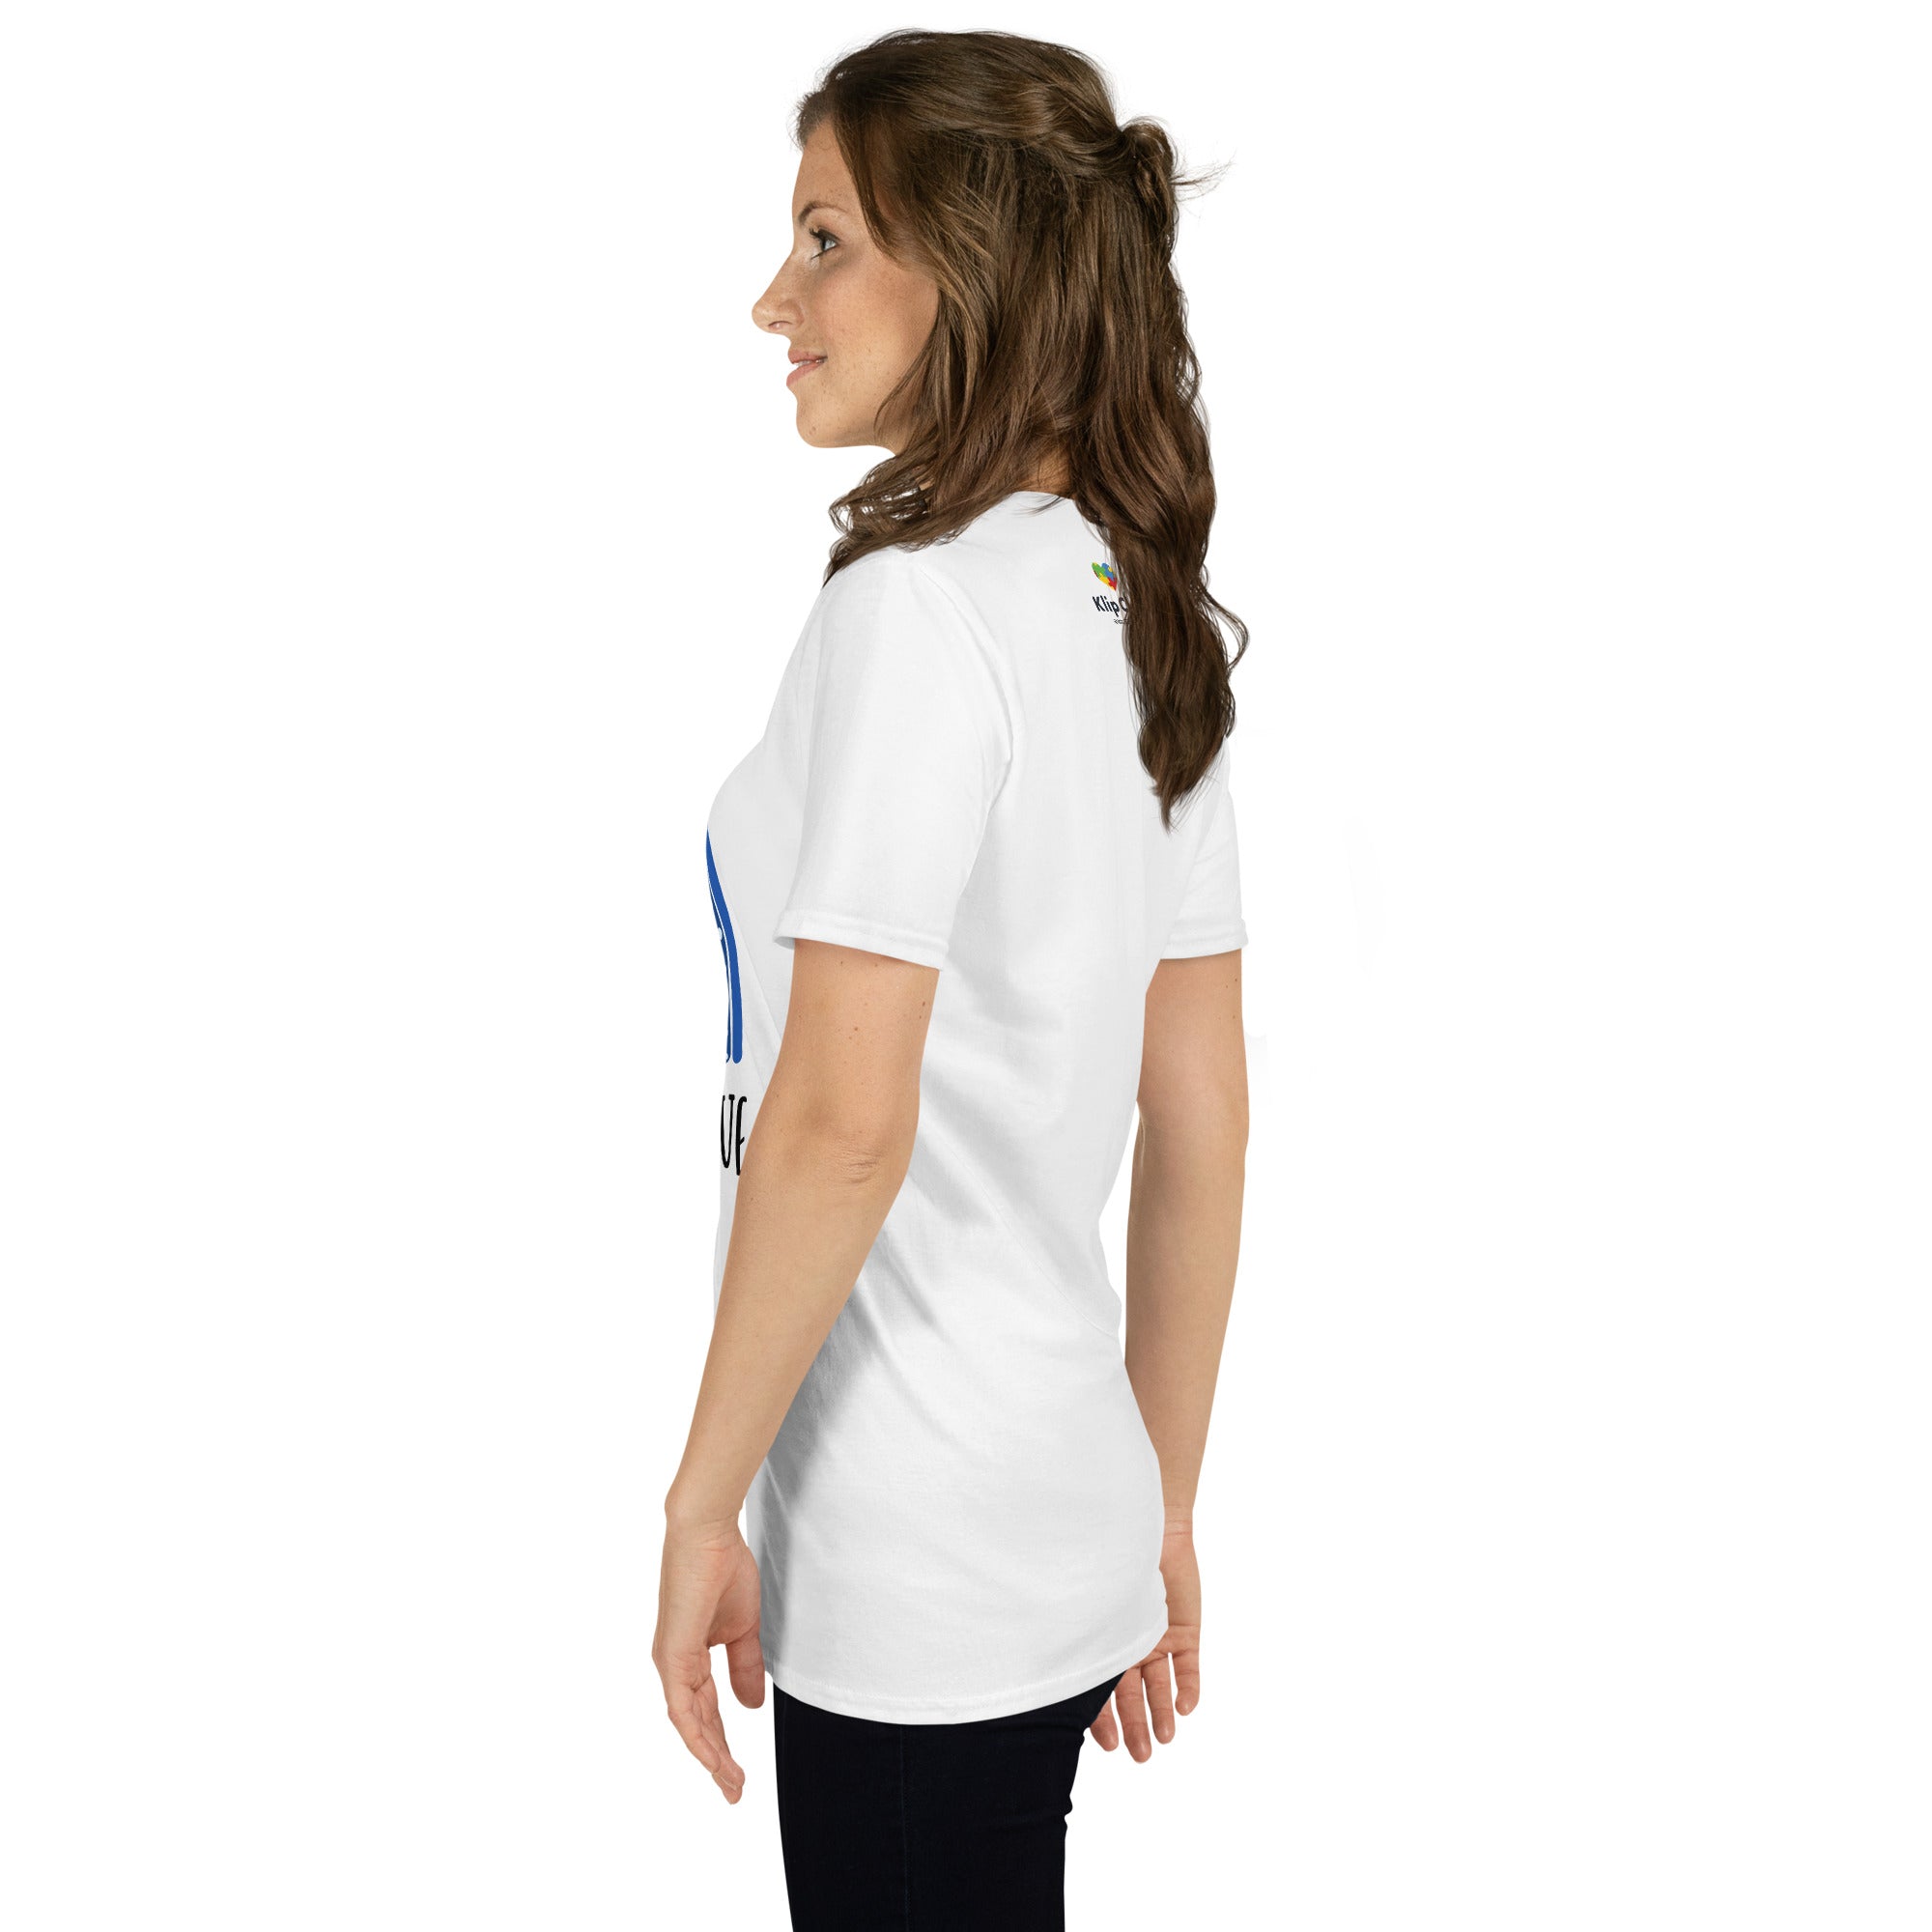 Short-Sleeve Unisex T-Shirt- In April  We Wear Blue